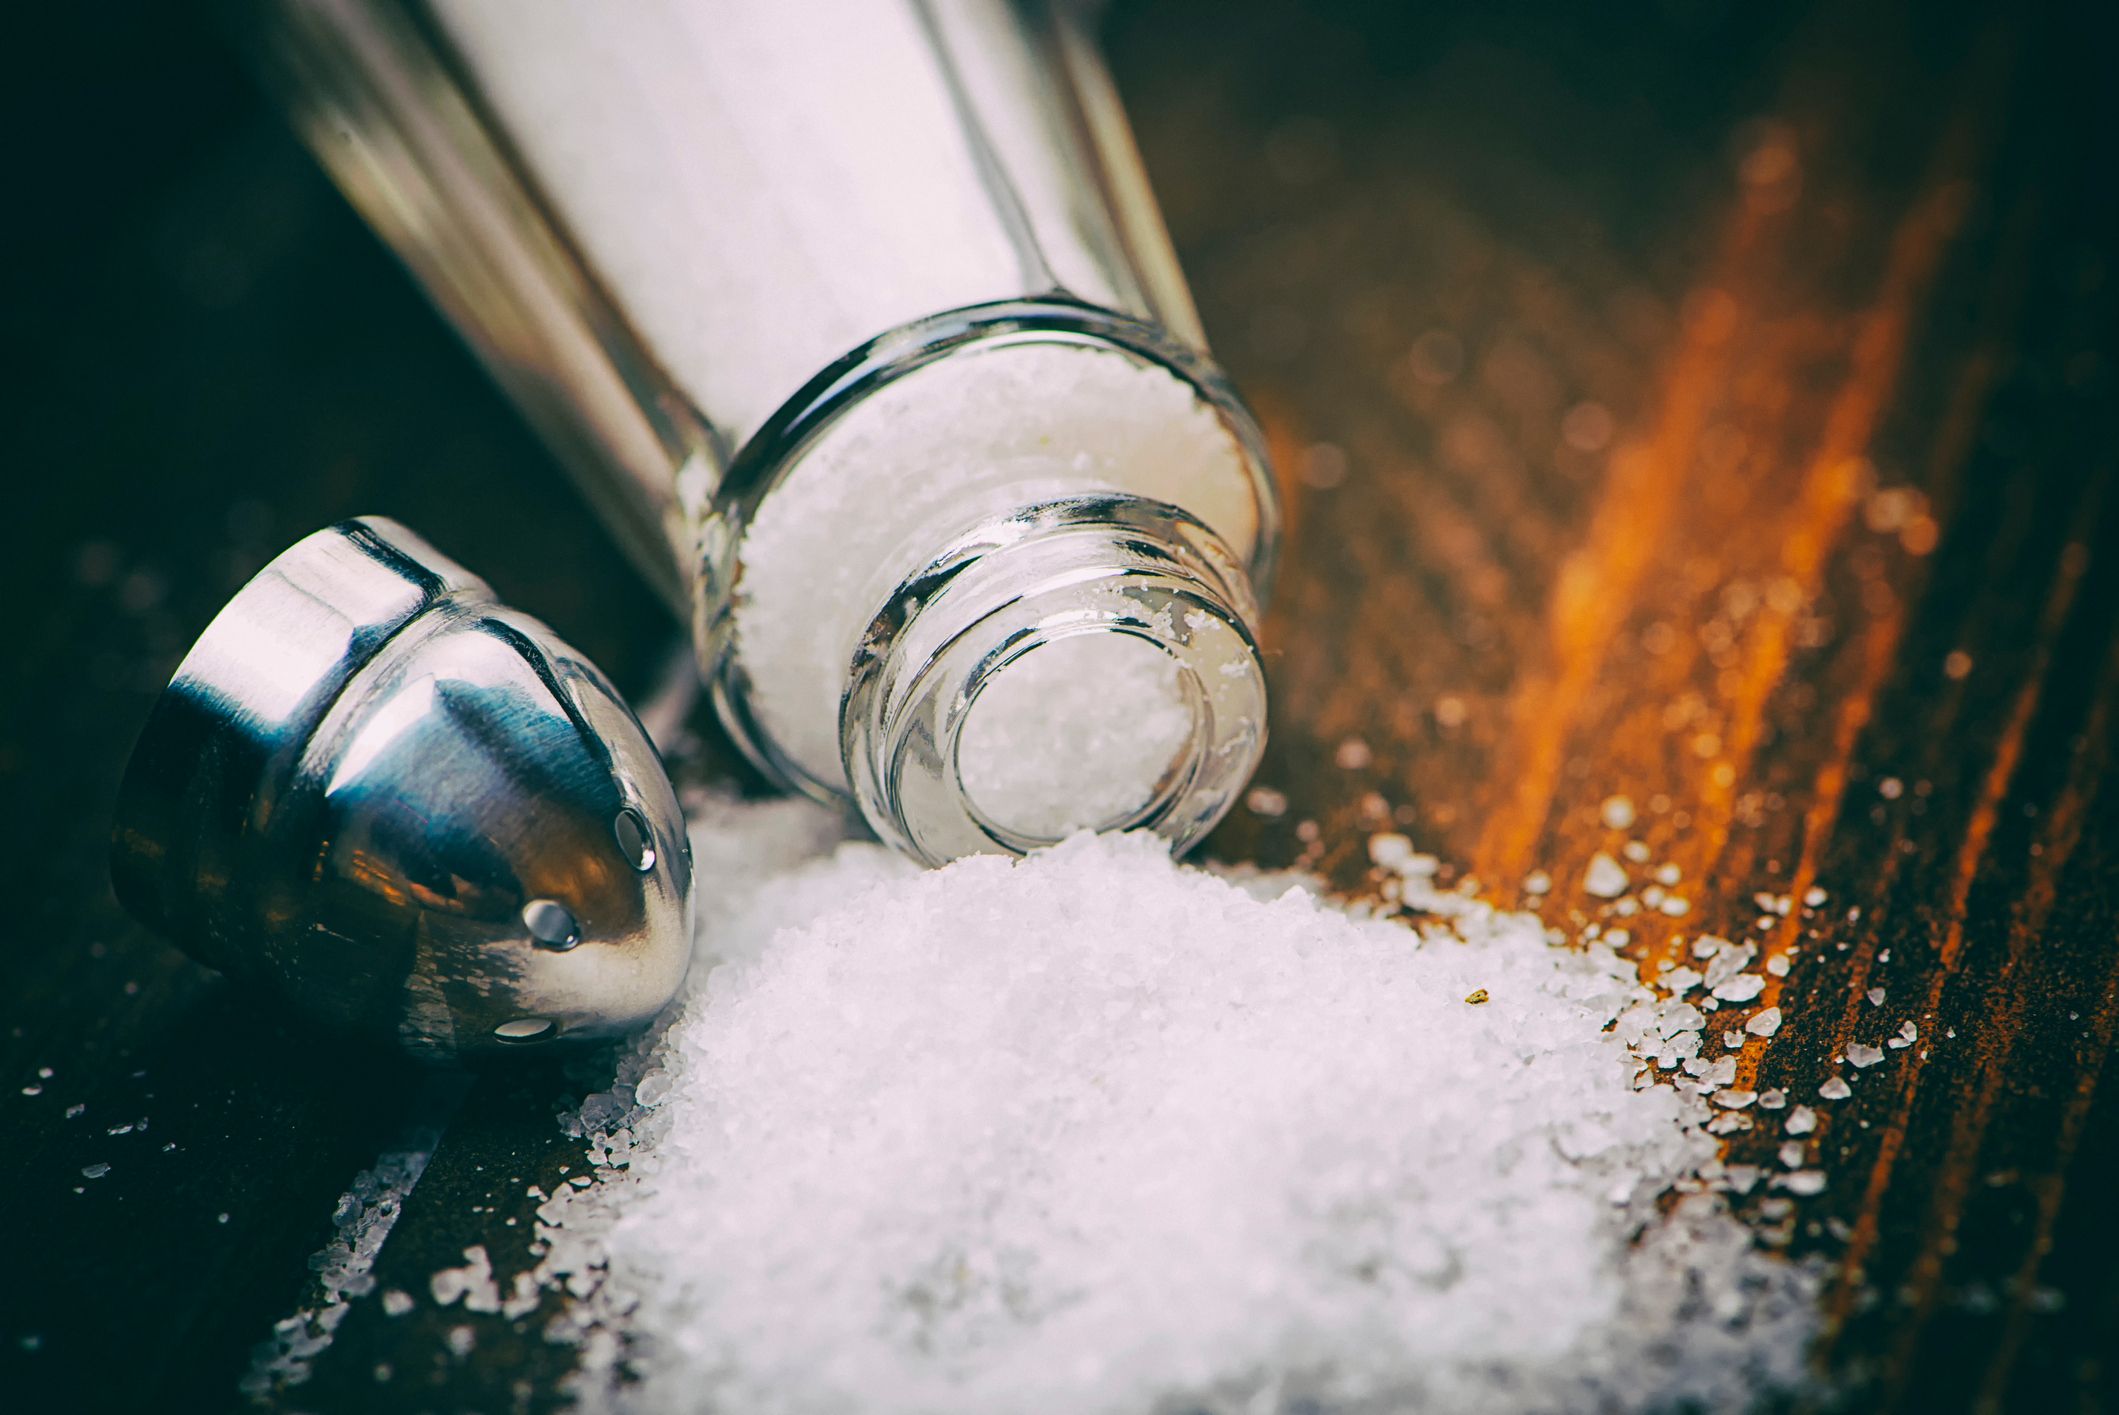 18 Flavorful Salt Alternatives